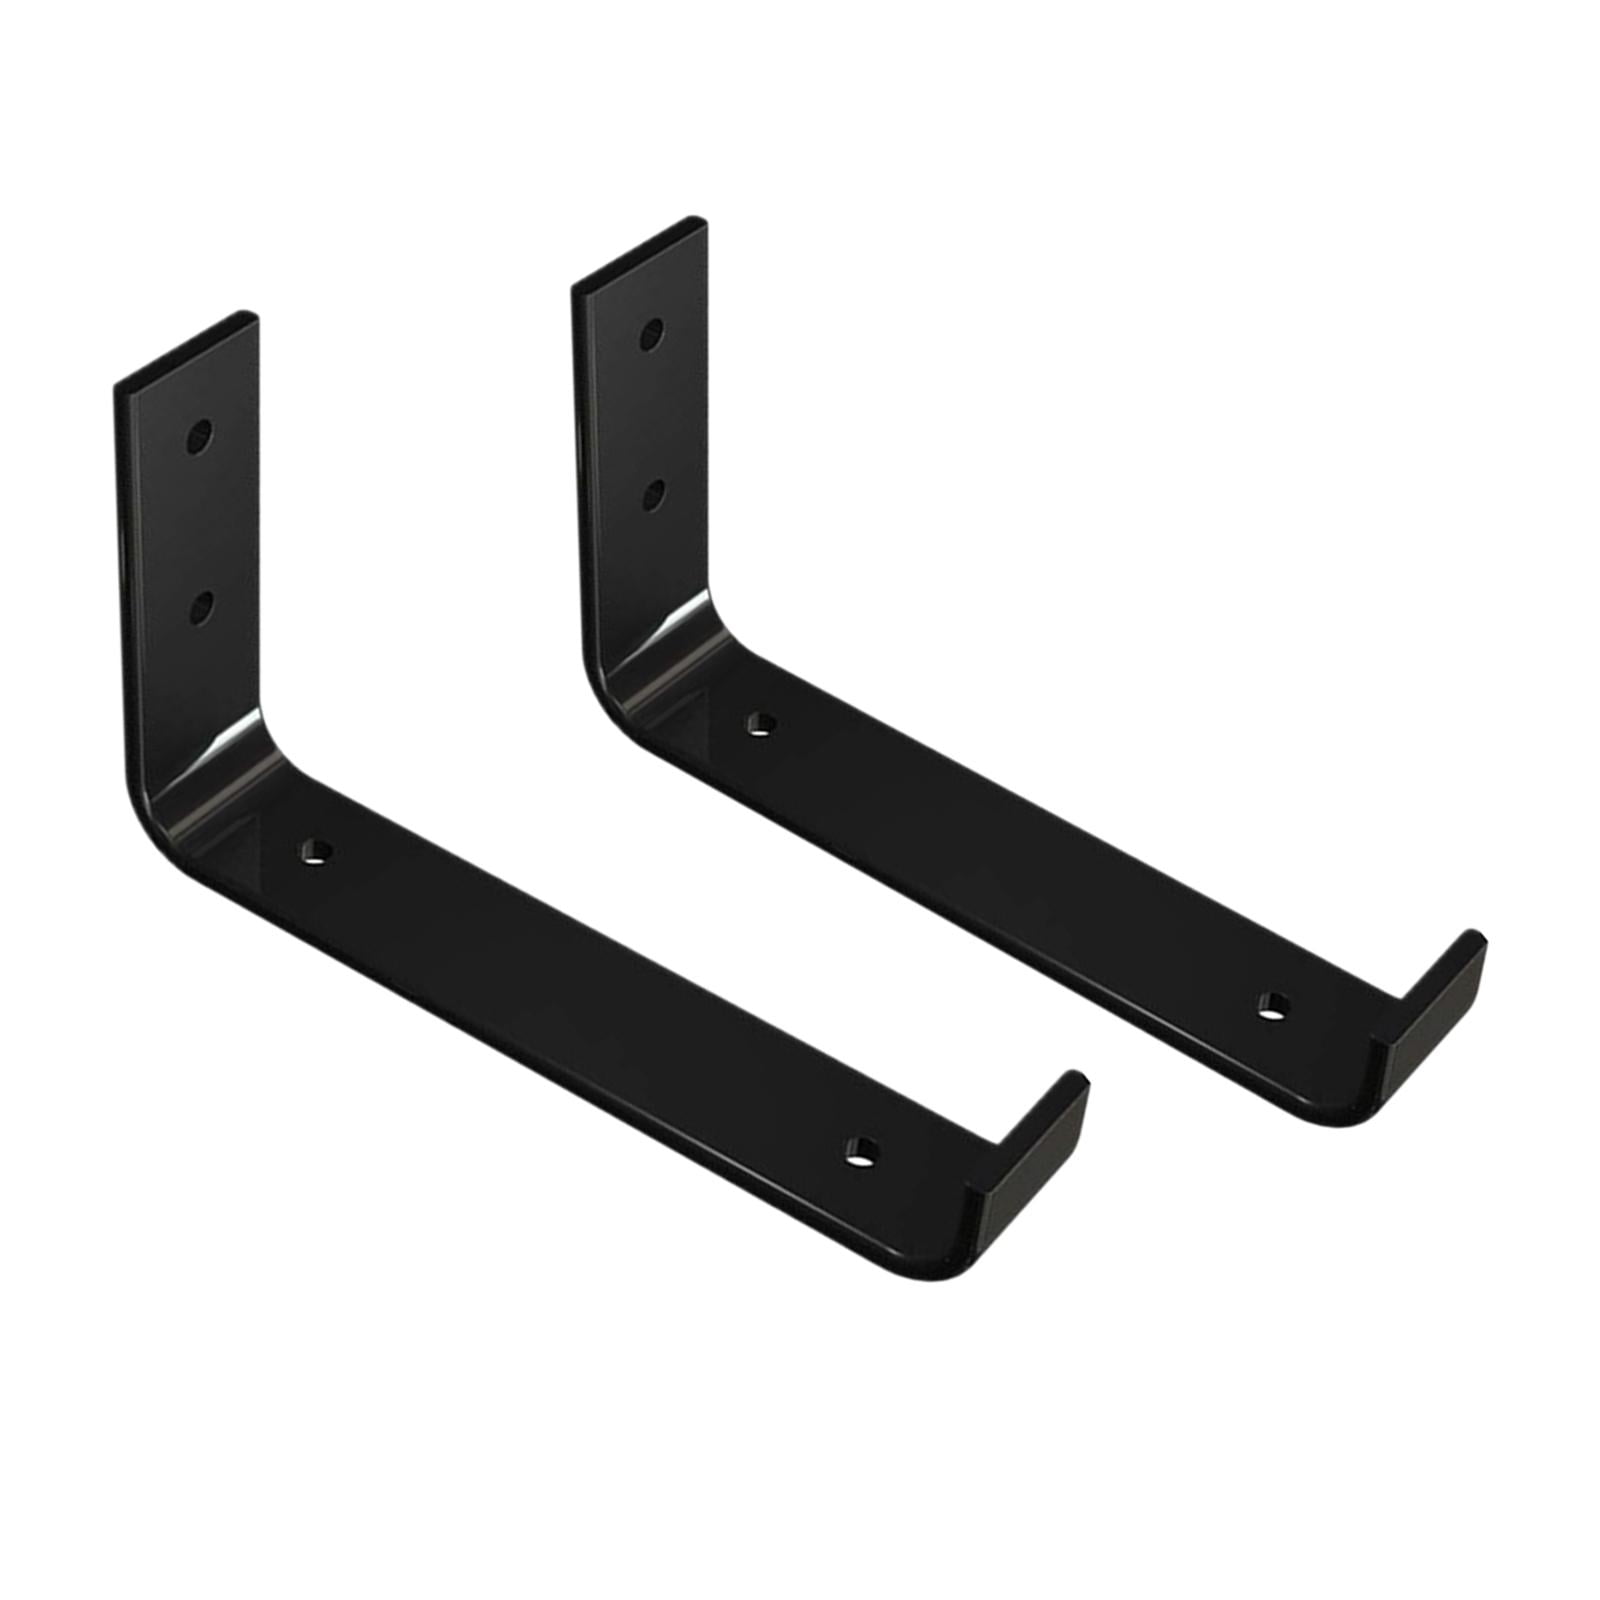 2x Heavy Duty Wall Rack Shelf Bracket Support Plank Holder 15x9.5cm Black 